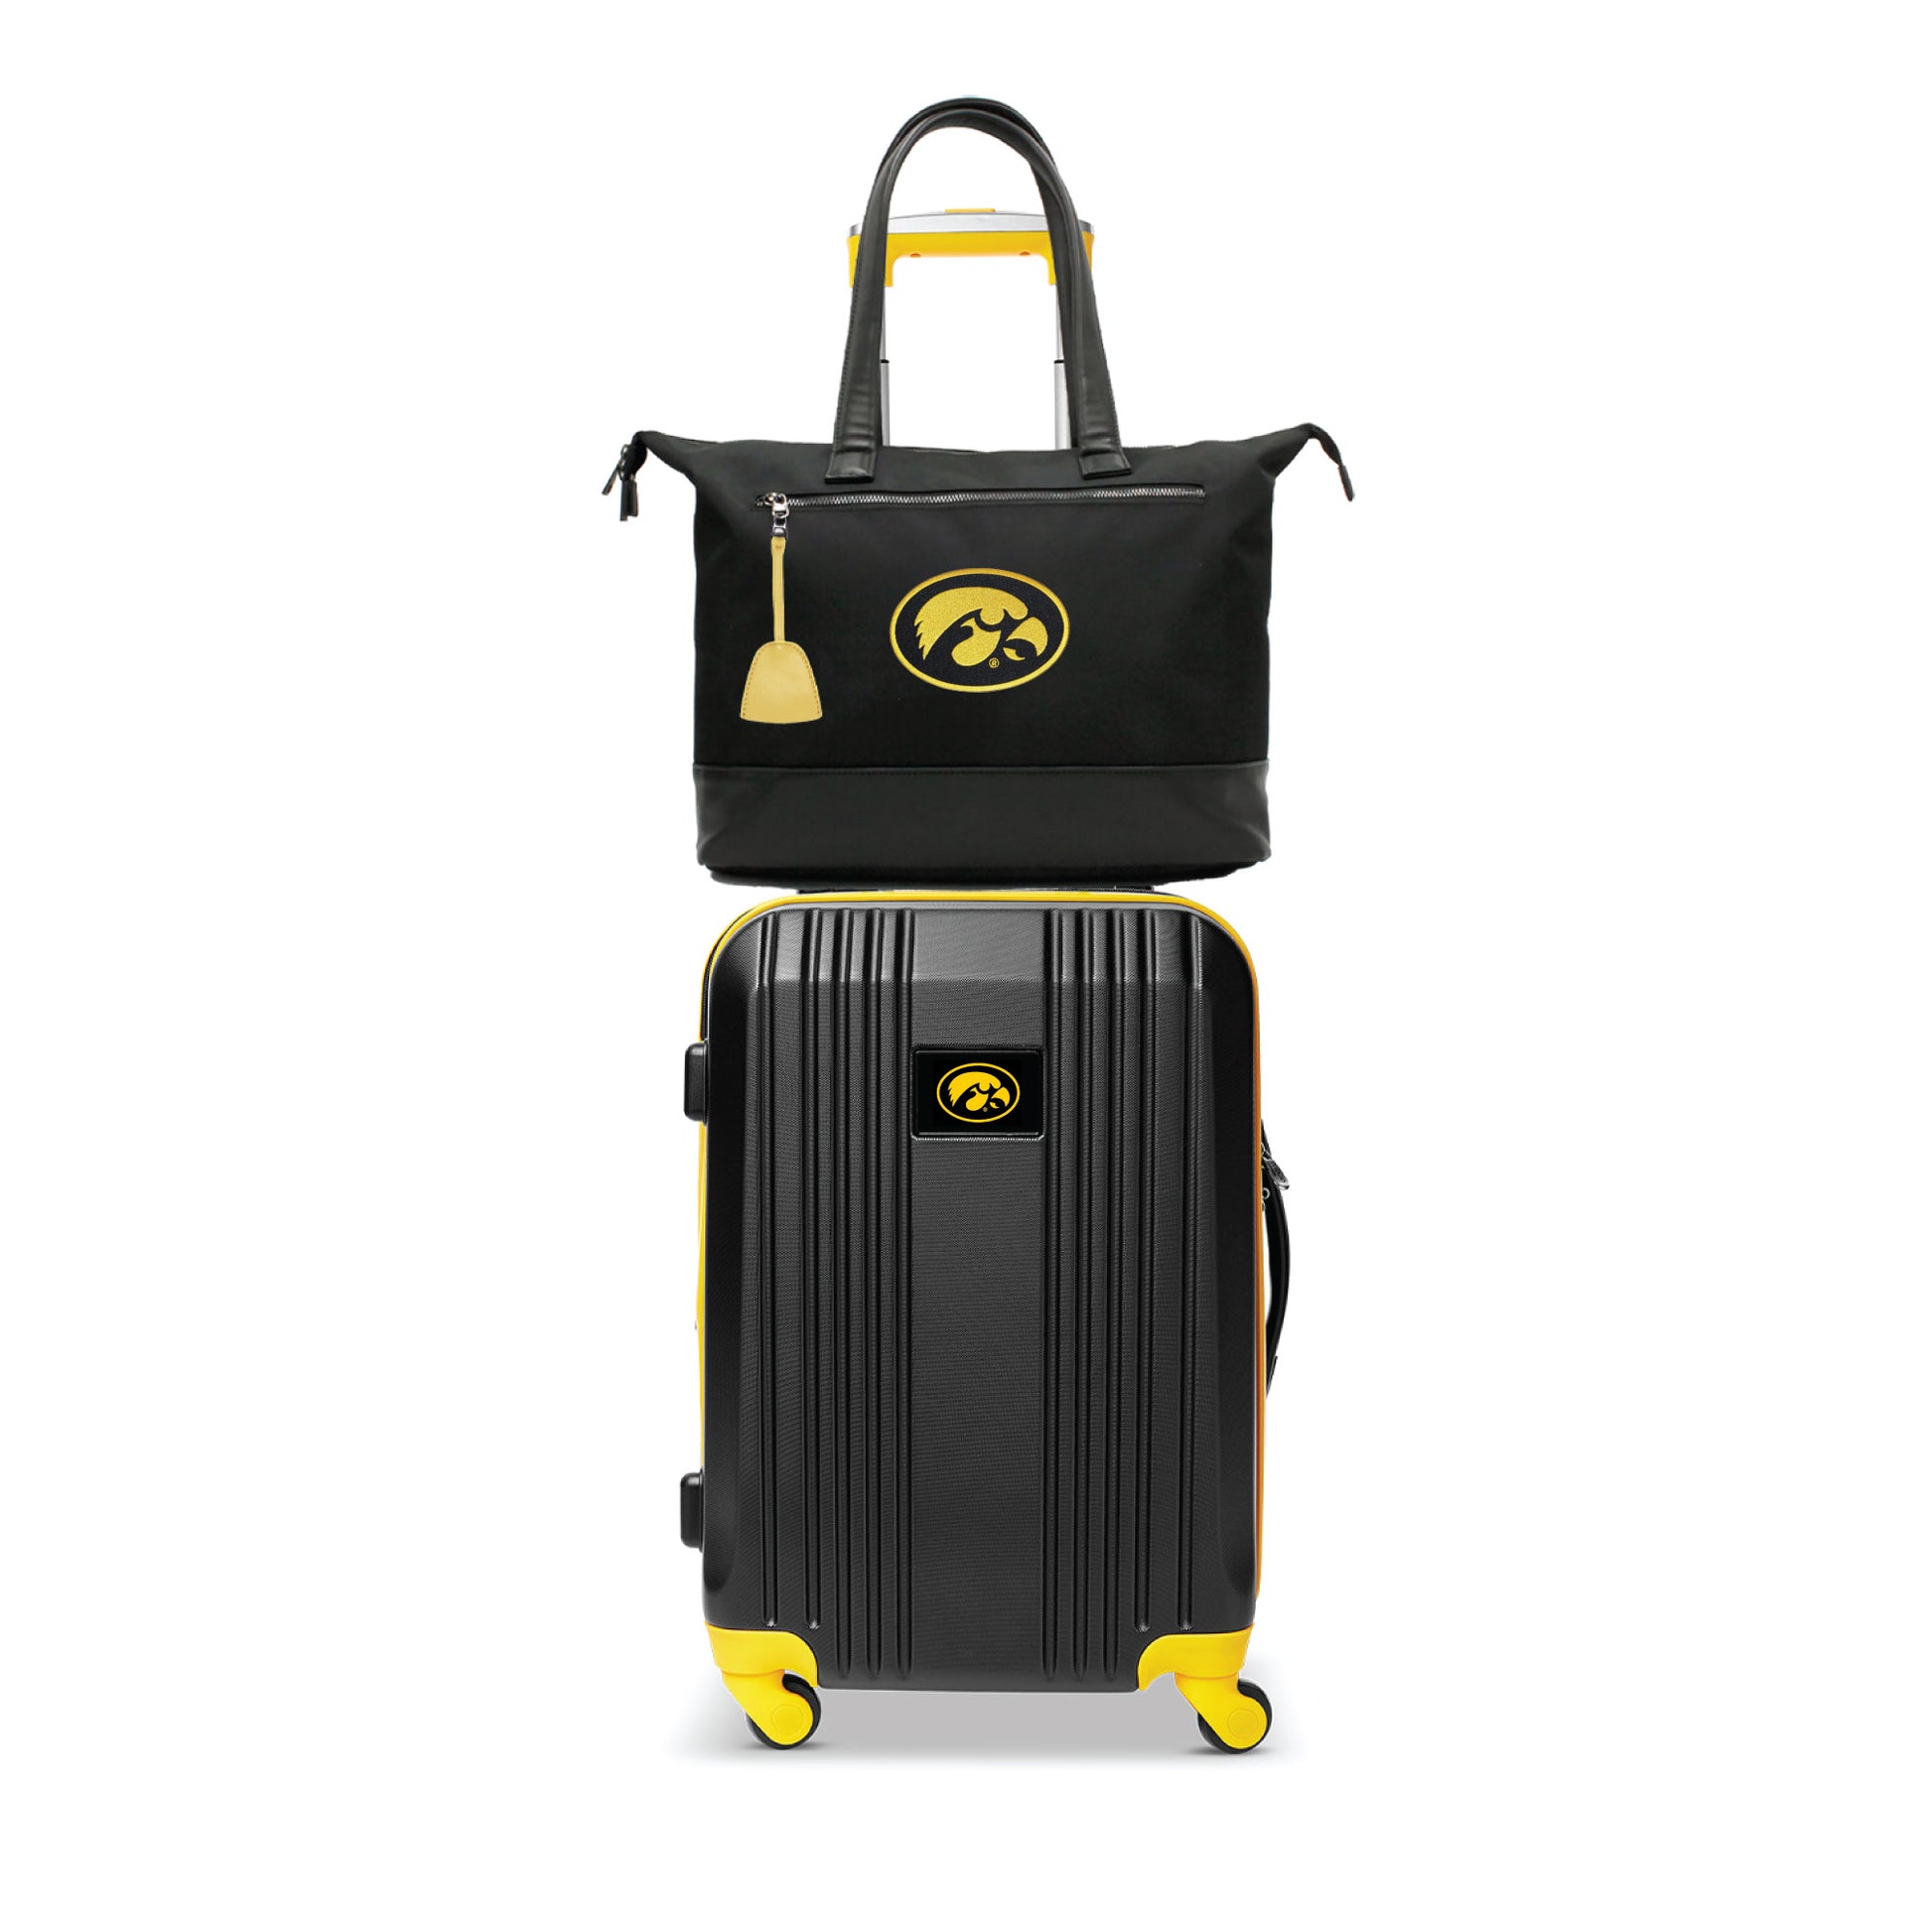 Iowa Hawkeyes Premium Laptop Tote Bag and Luggage Set